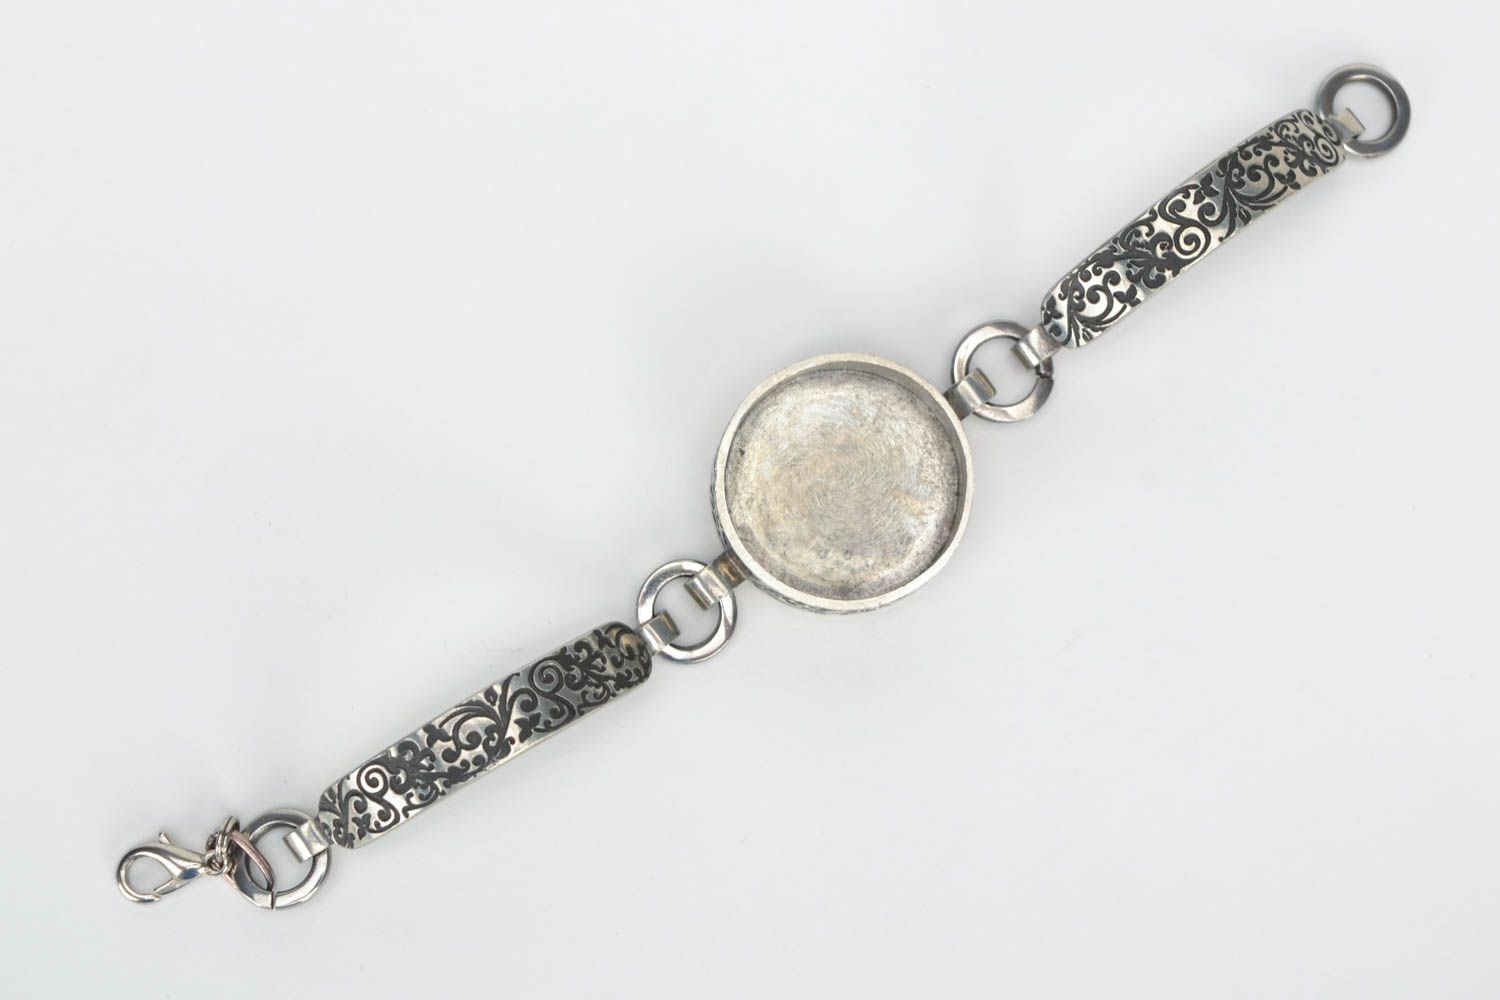 Accessory for jewelry handmade beautiful metal bracelet how to make jewelry photo 1